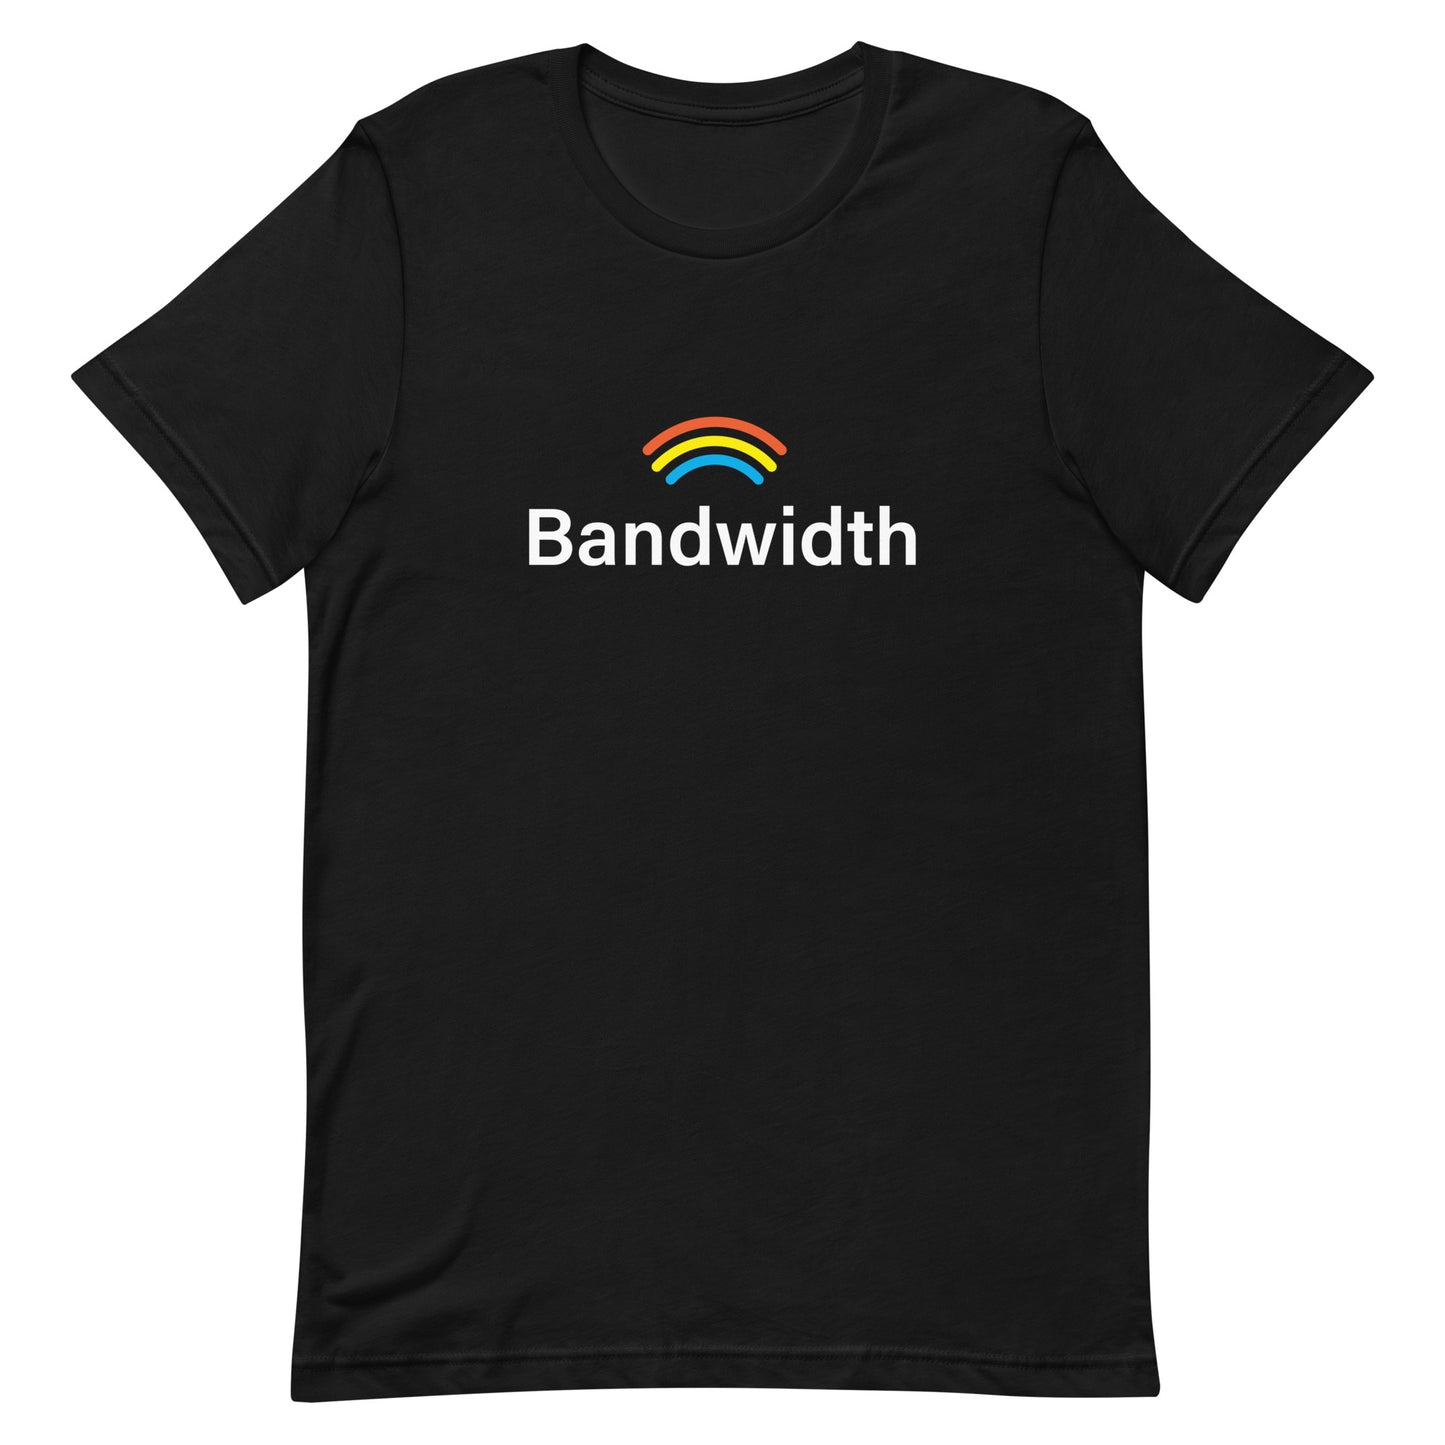 Bandwidth - Sustainably Made Men's Short Sleeve Tee